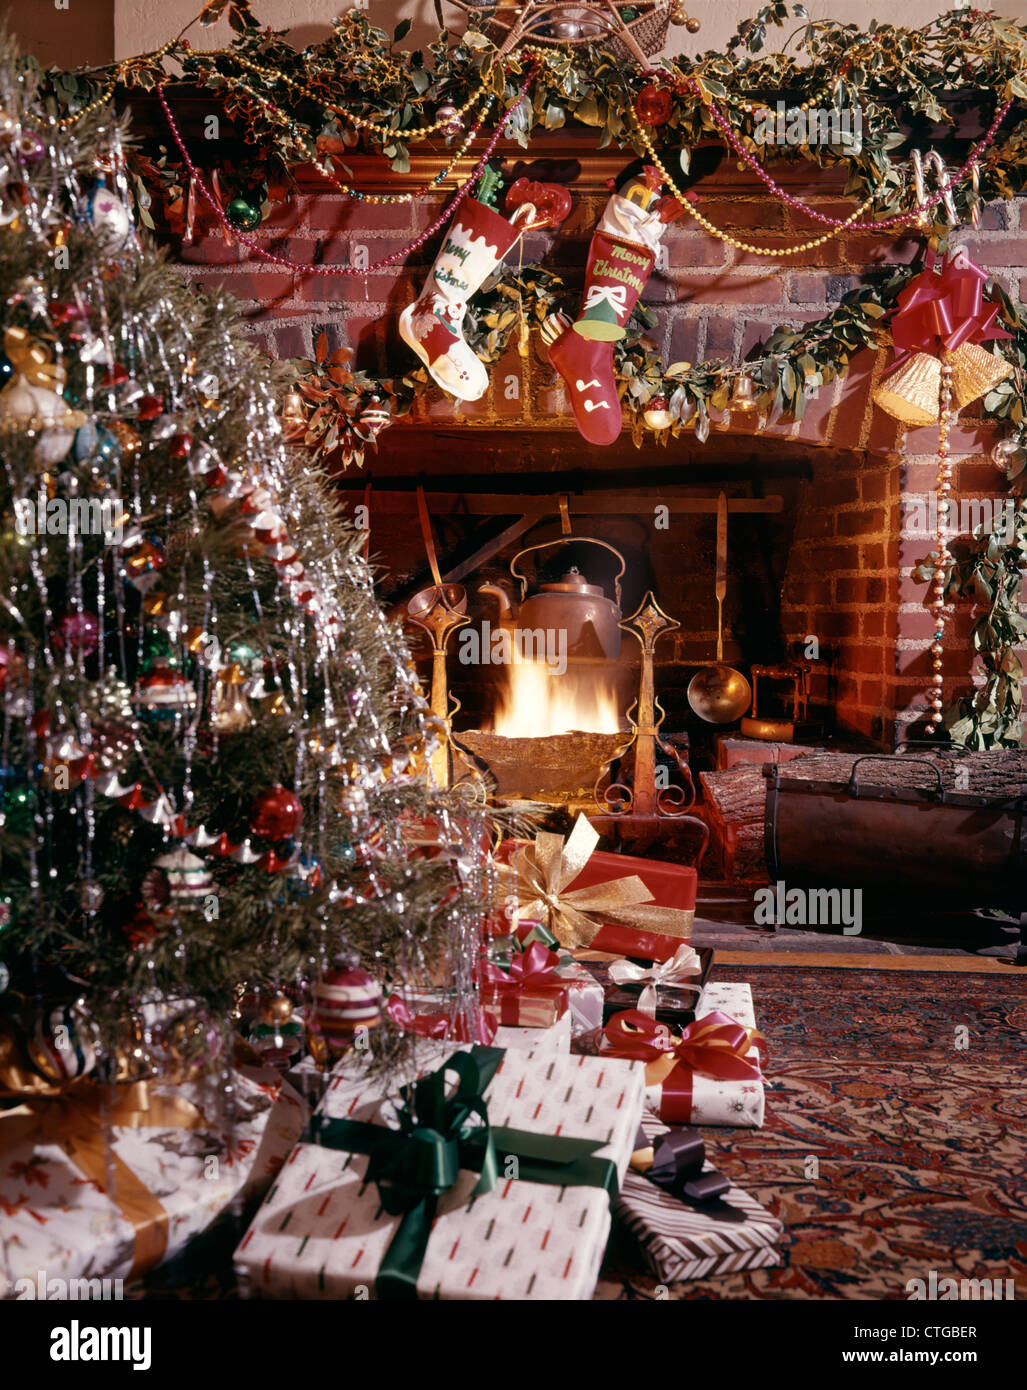 1960s CHRISTMAS TREE STOCKINGS PRESENTS DECORATION AROUND BLAZING FIREPLACE  Stock Photo - Alamy